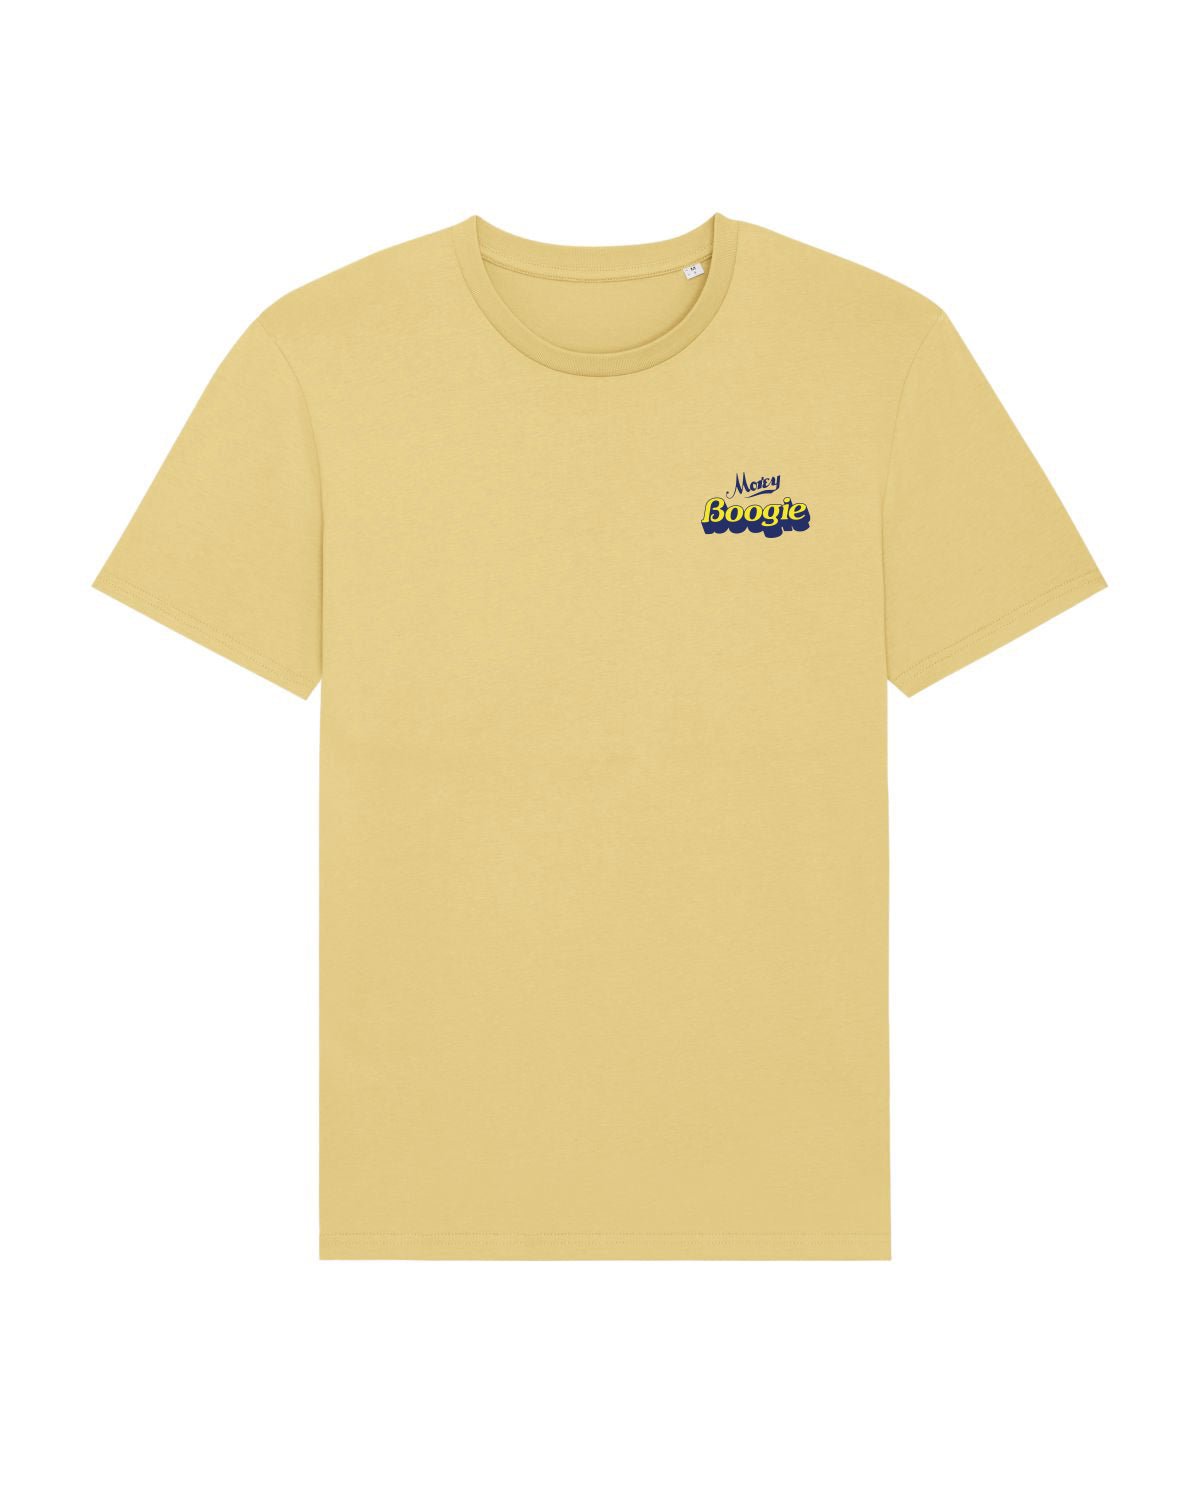 Morey Original3 T-Shirt - Butter - moreyboogie